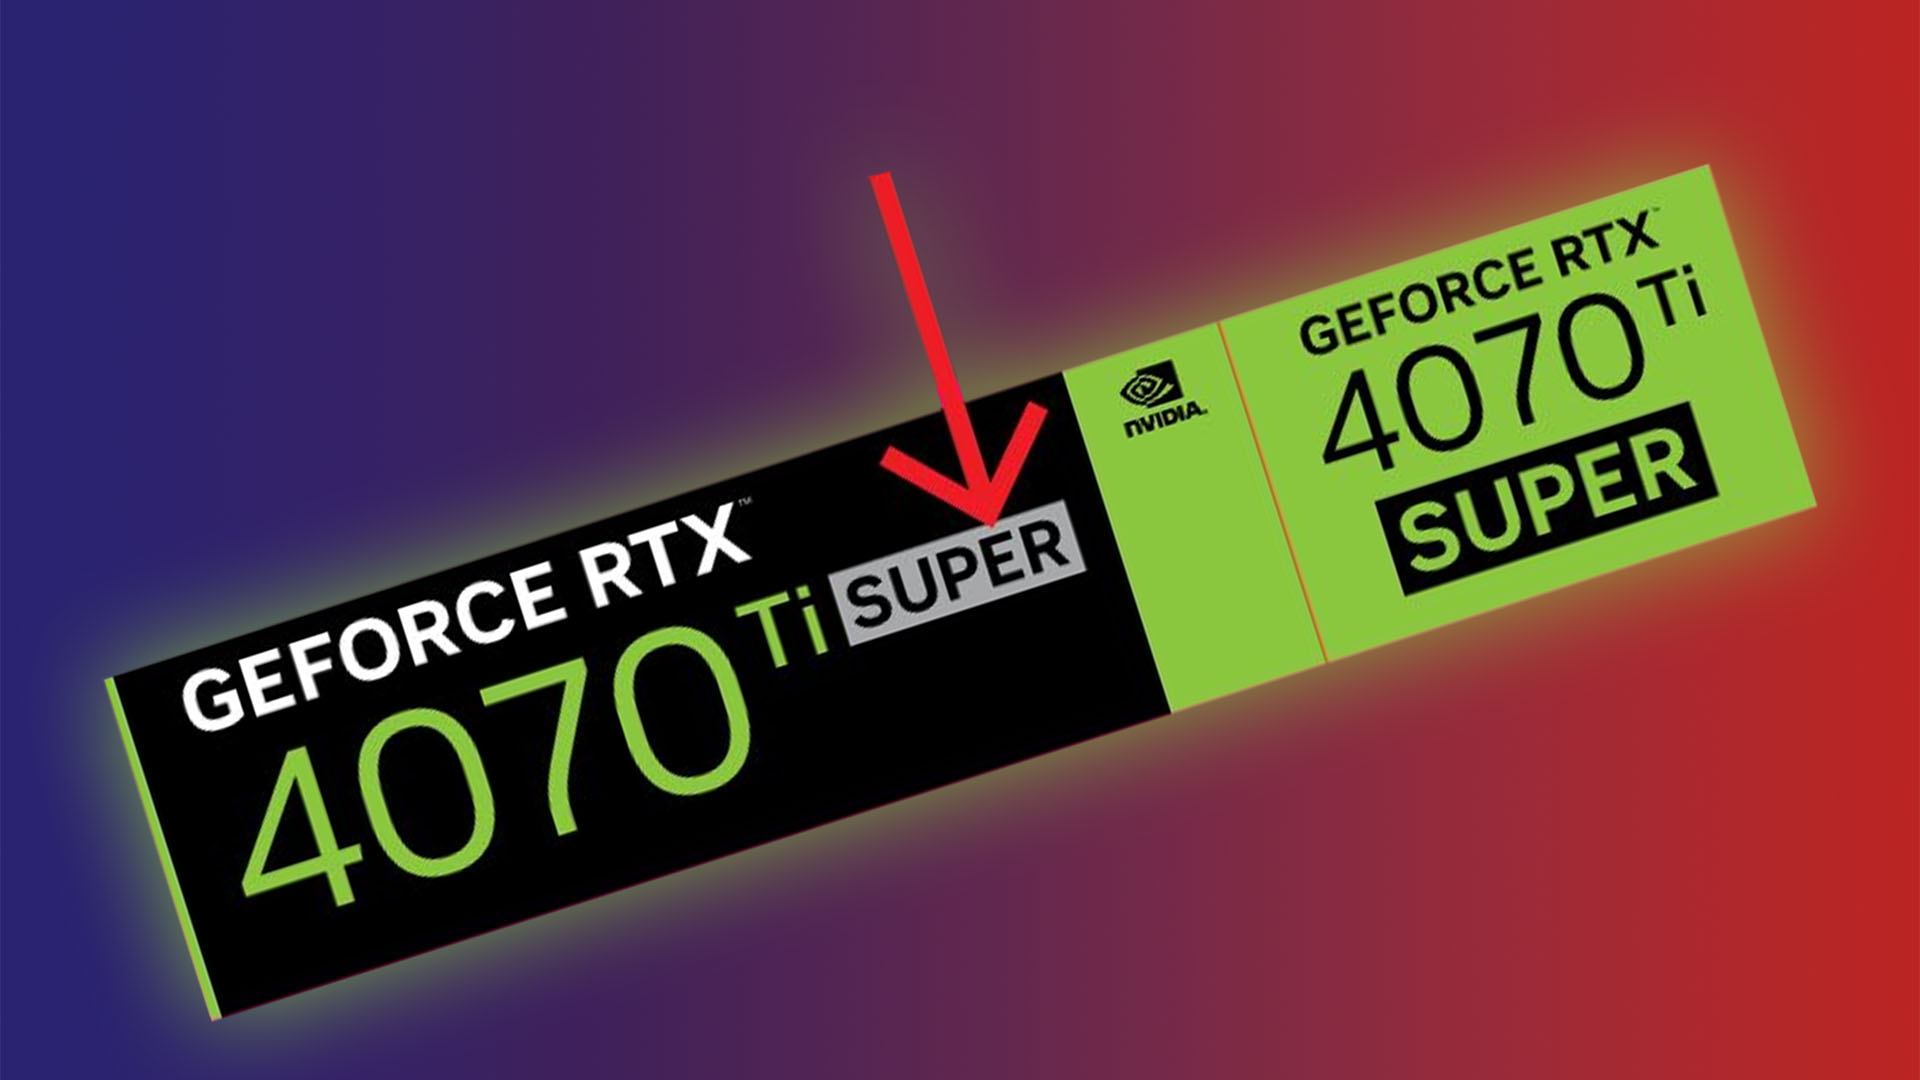 Nvidia RTX 4070 Ti Super logo leaks, showing gray future